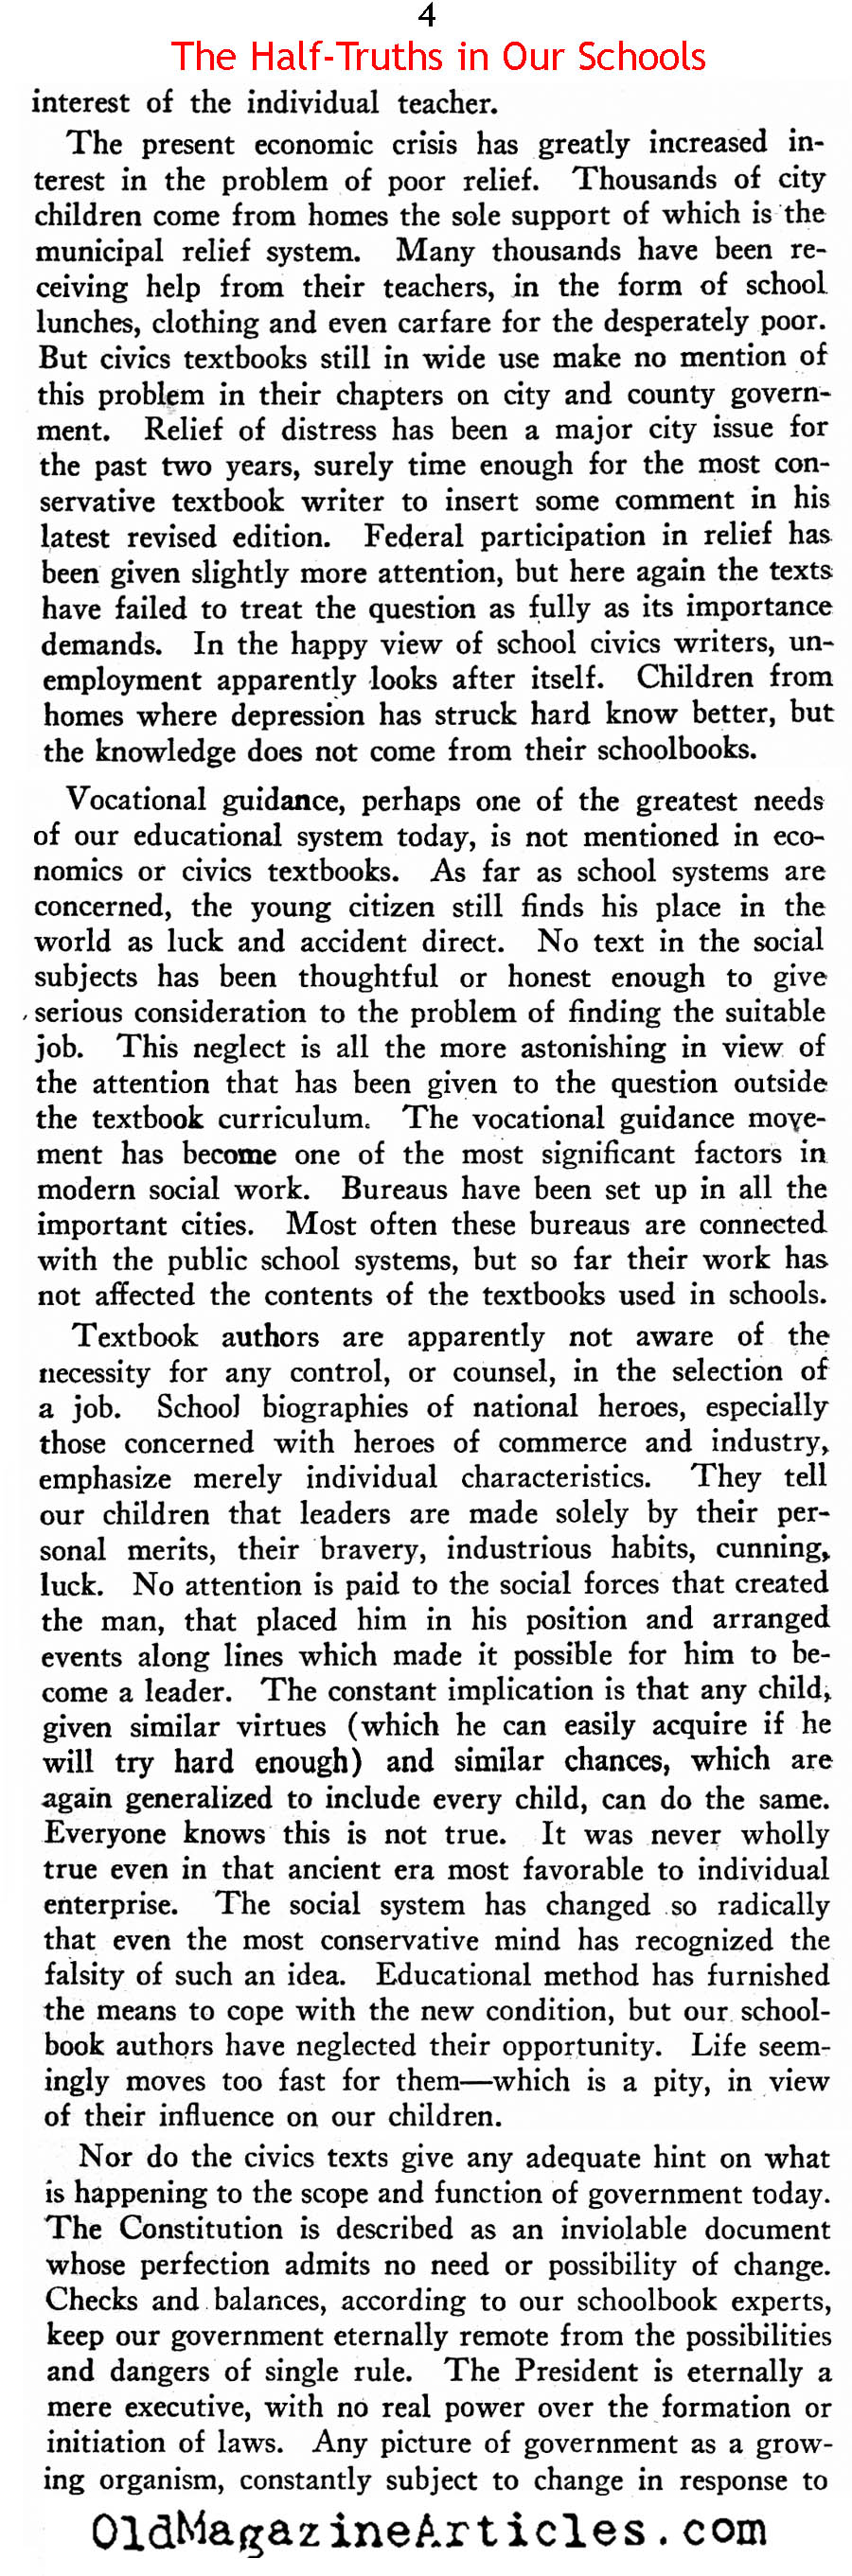 The Case For Social Studies (New Outlook Magazine, 1933)